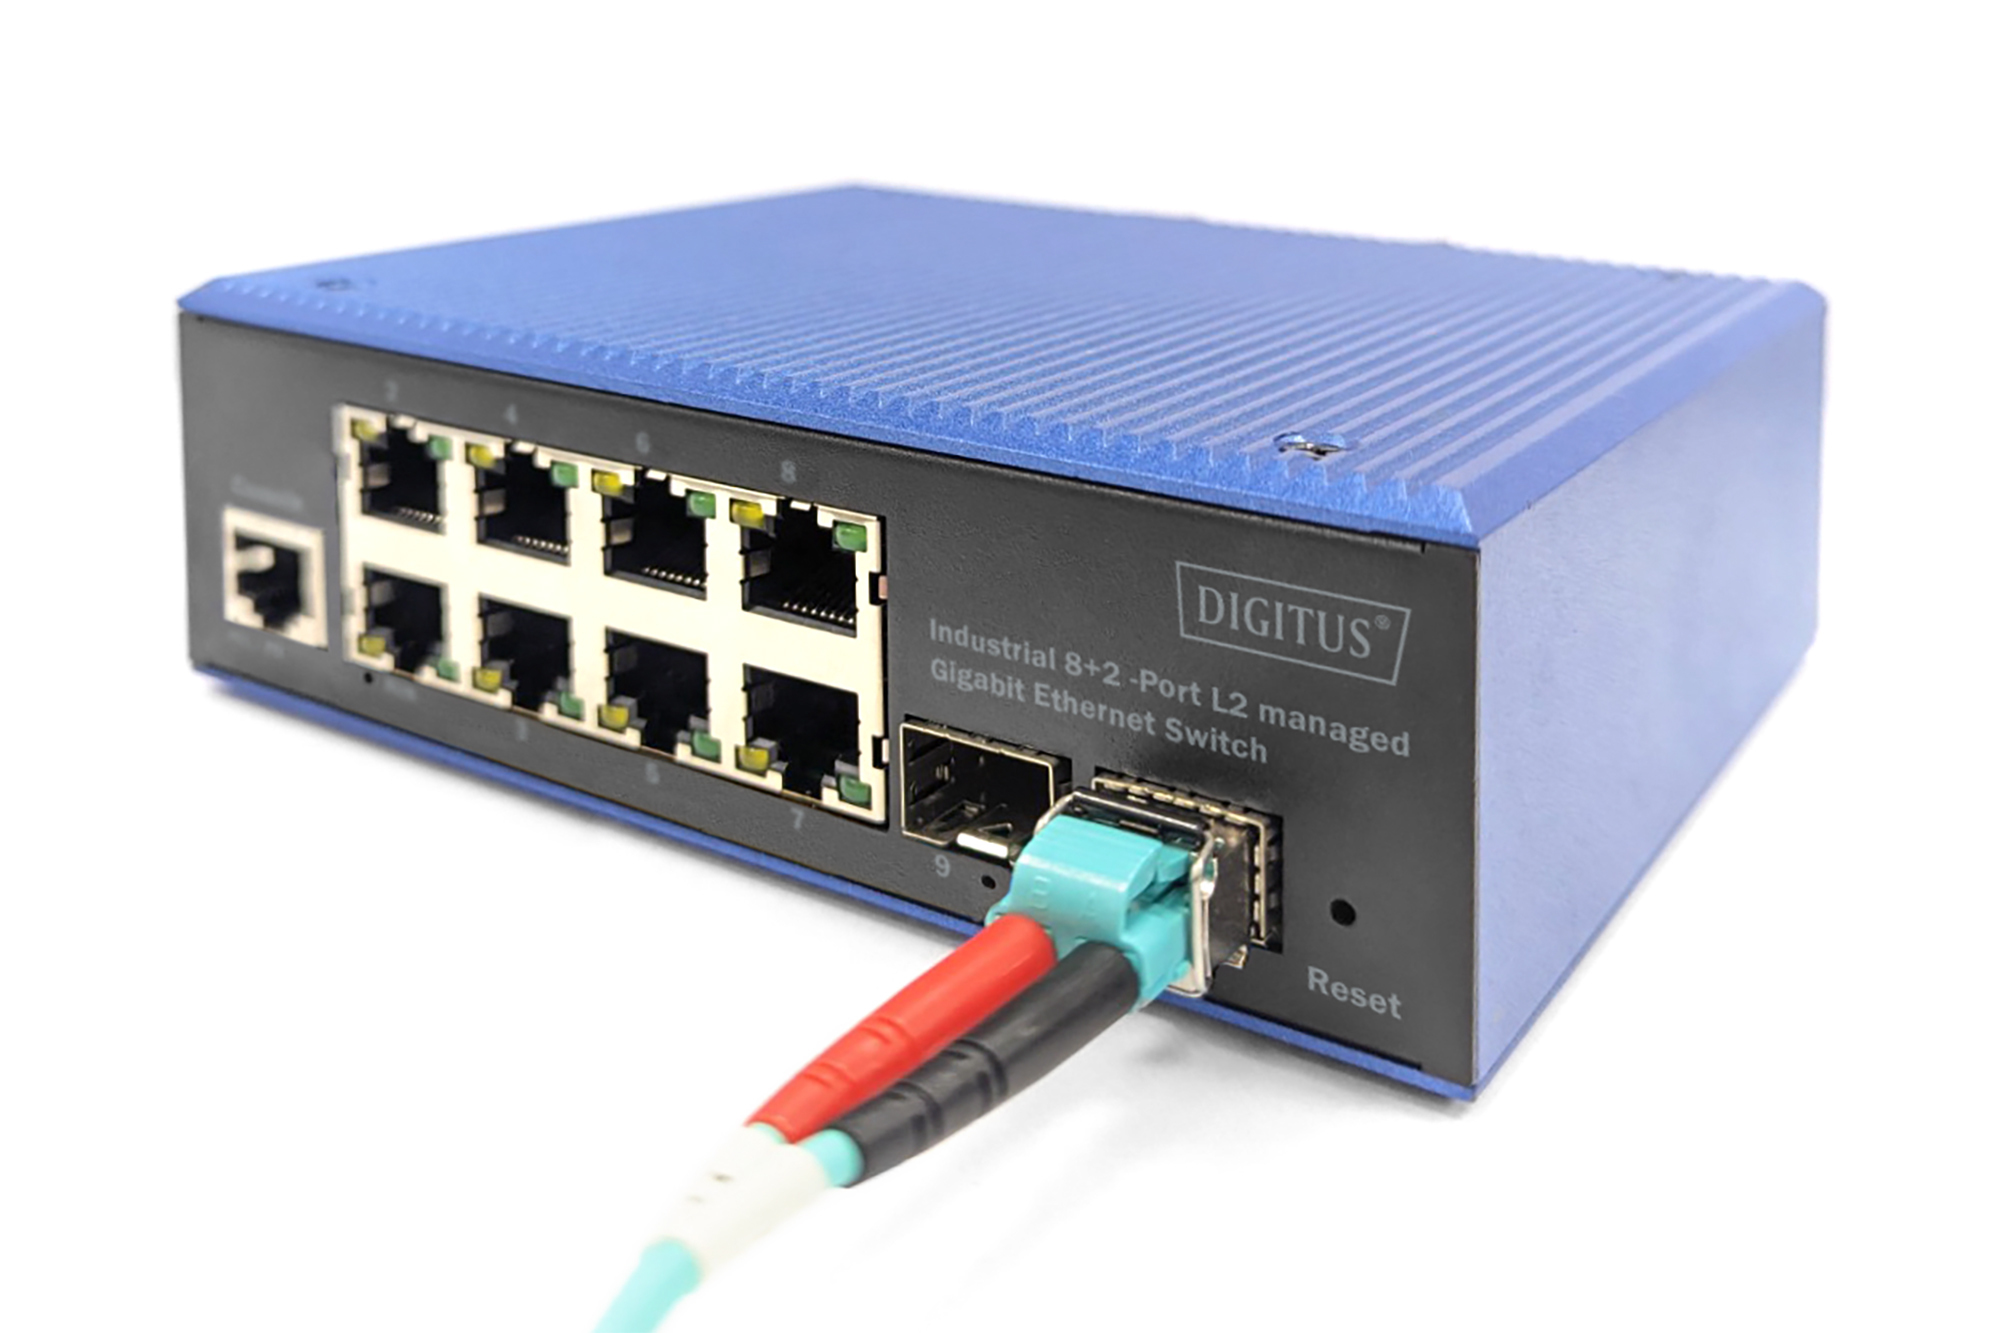 DIGITUS DN-651156 Industrial 8+2 -Port L2 managed Gigabit Ethernet Switch